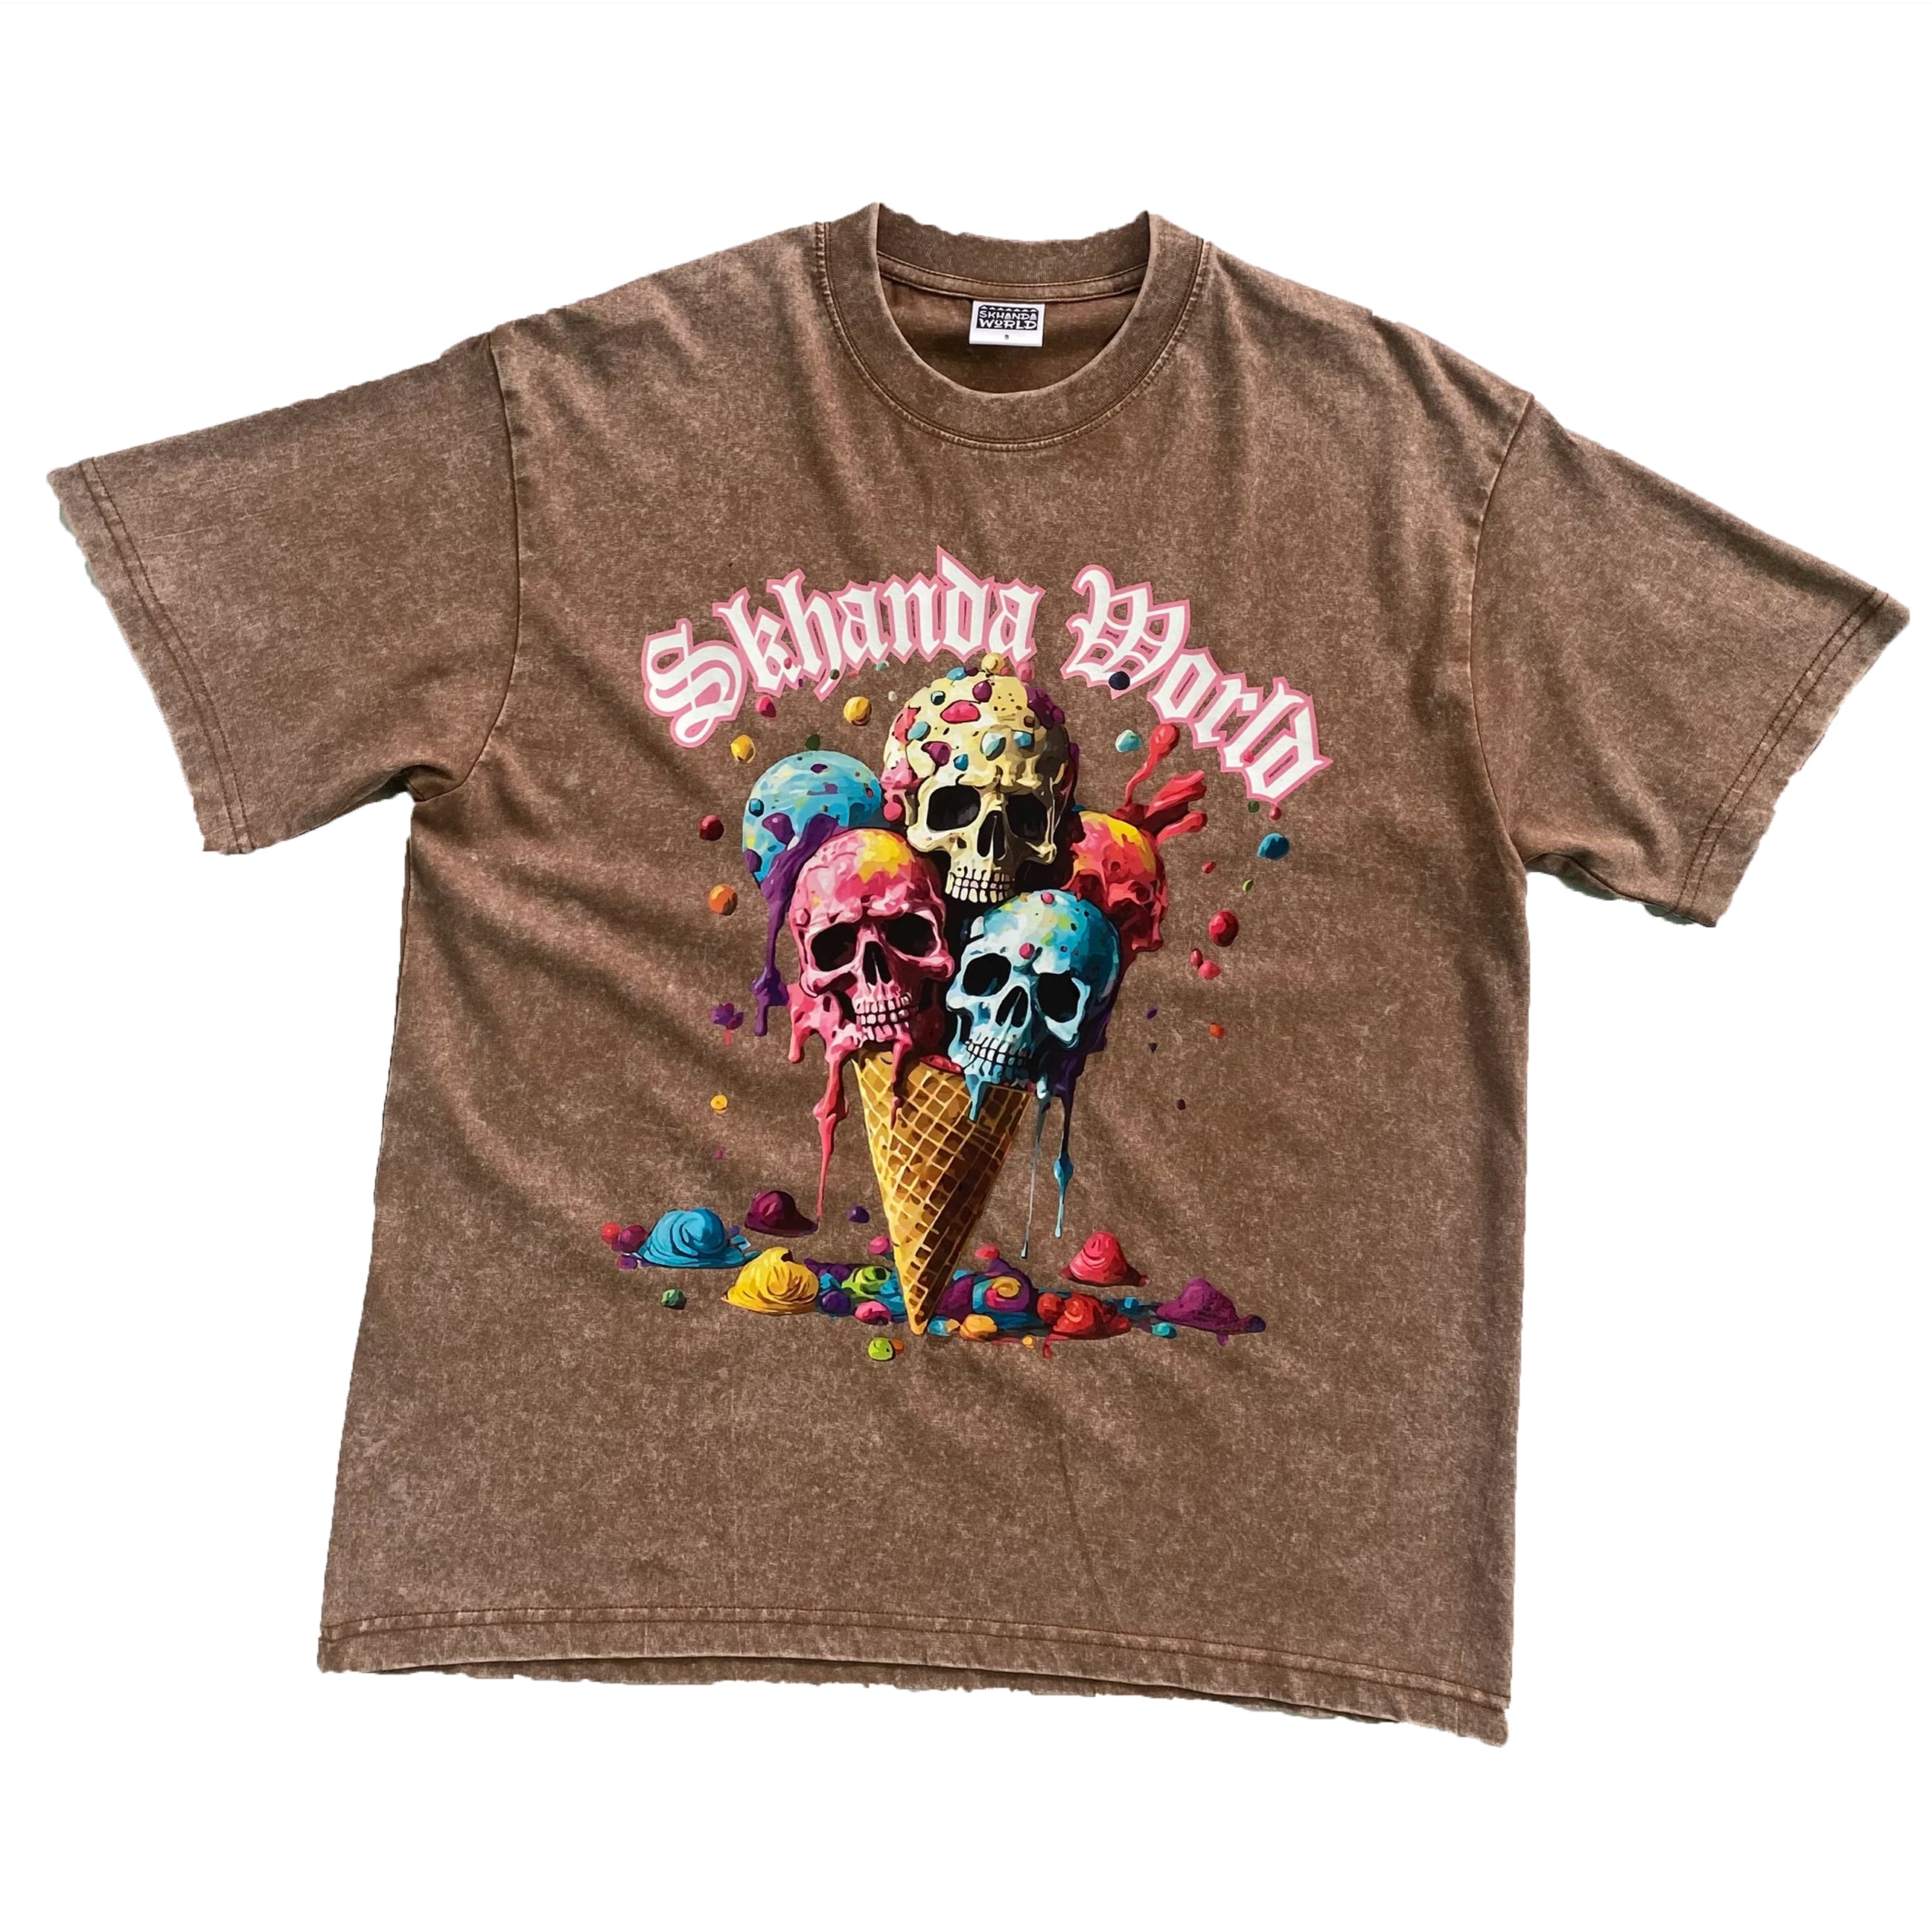 Skhanda World Ice-Cream Rockstar T-Shirt Stone Wash Brown